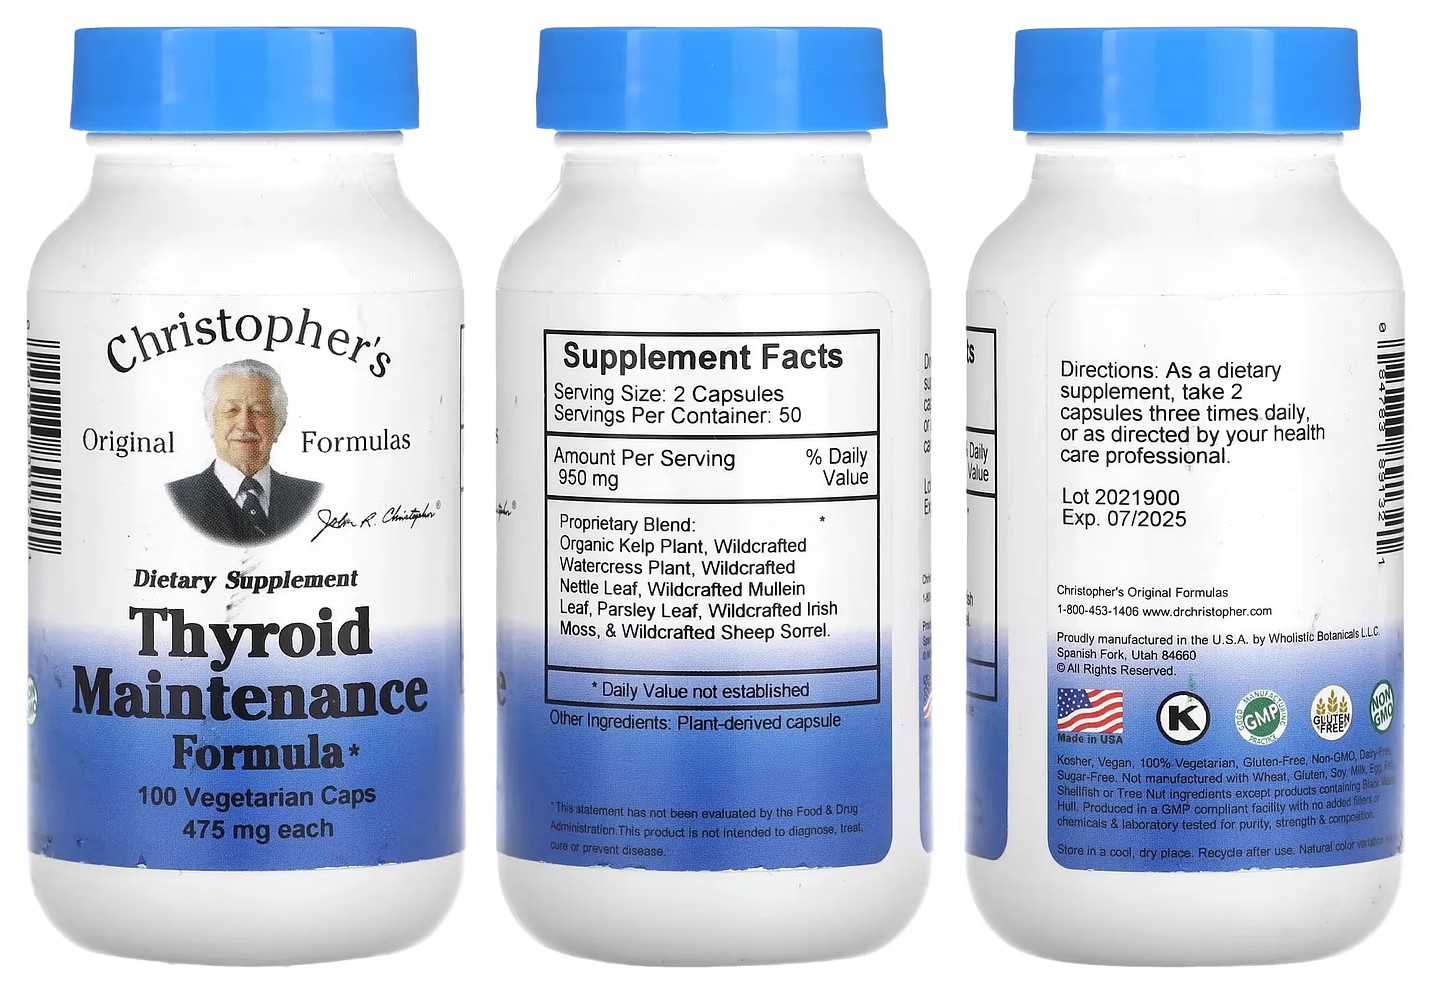 Christopher's Original Formulas, Thyroid Maintenance Formula packaging